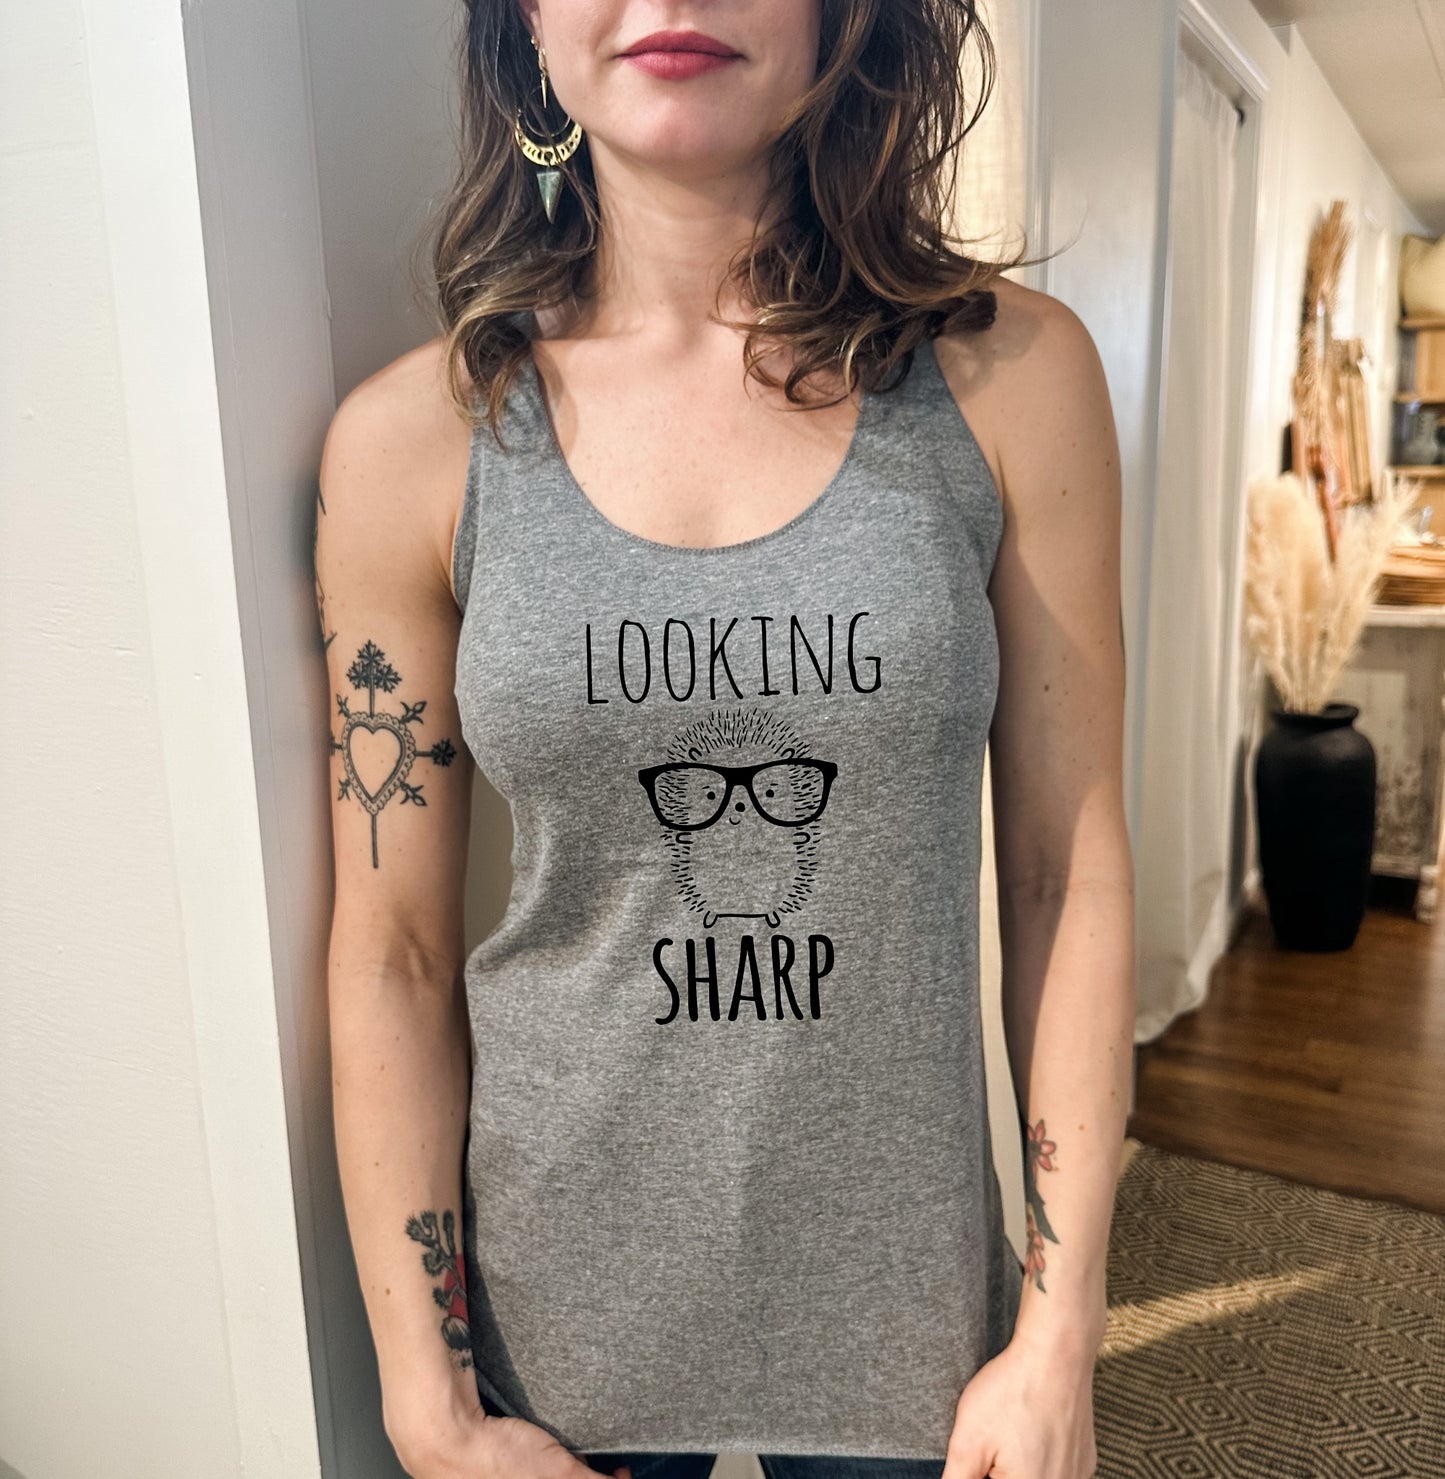 Looking Sharp (Hedgehog) - Women's Tank - Heather Gray, Tahiti, or Envy